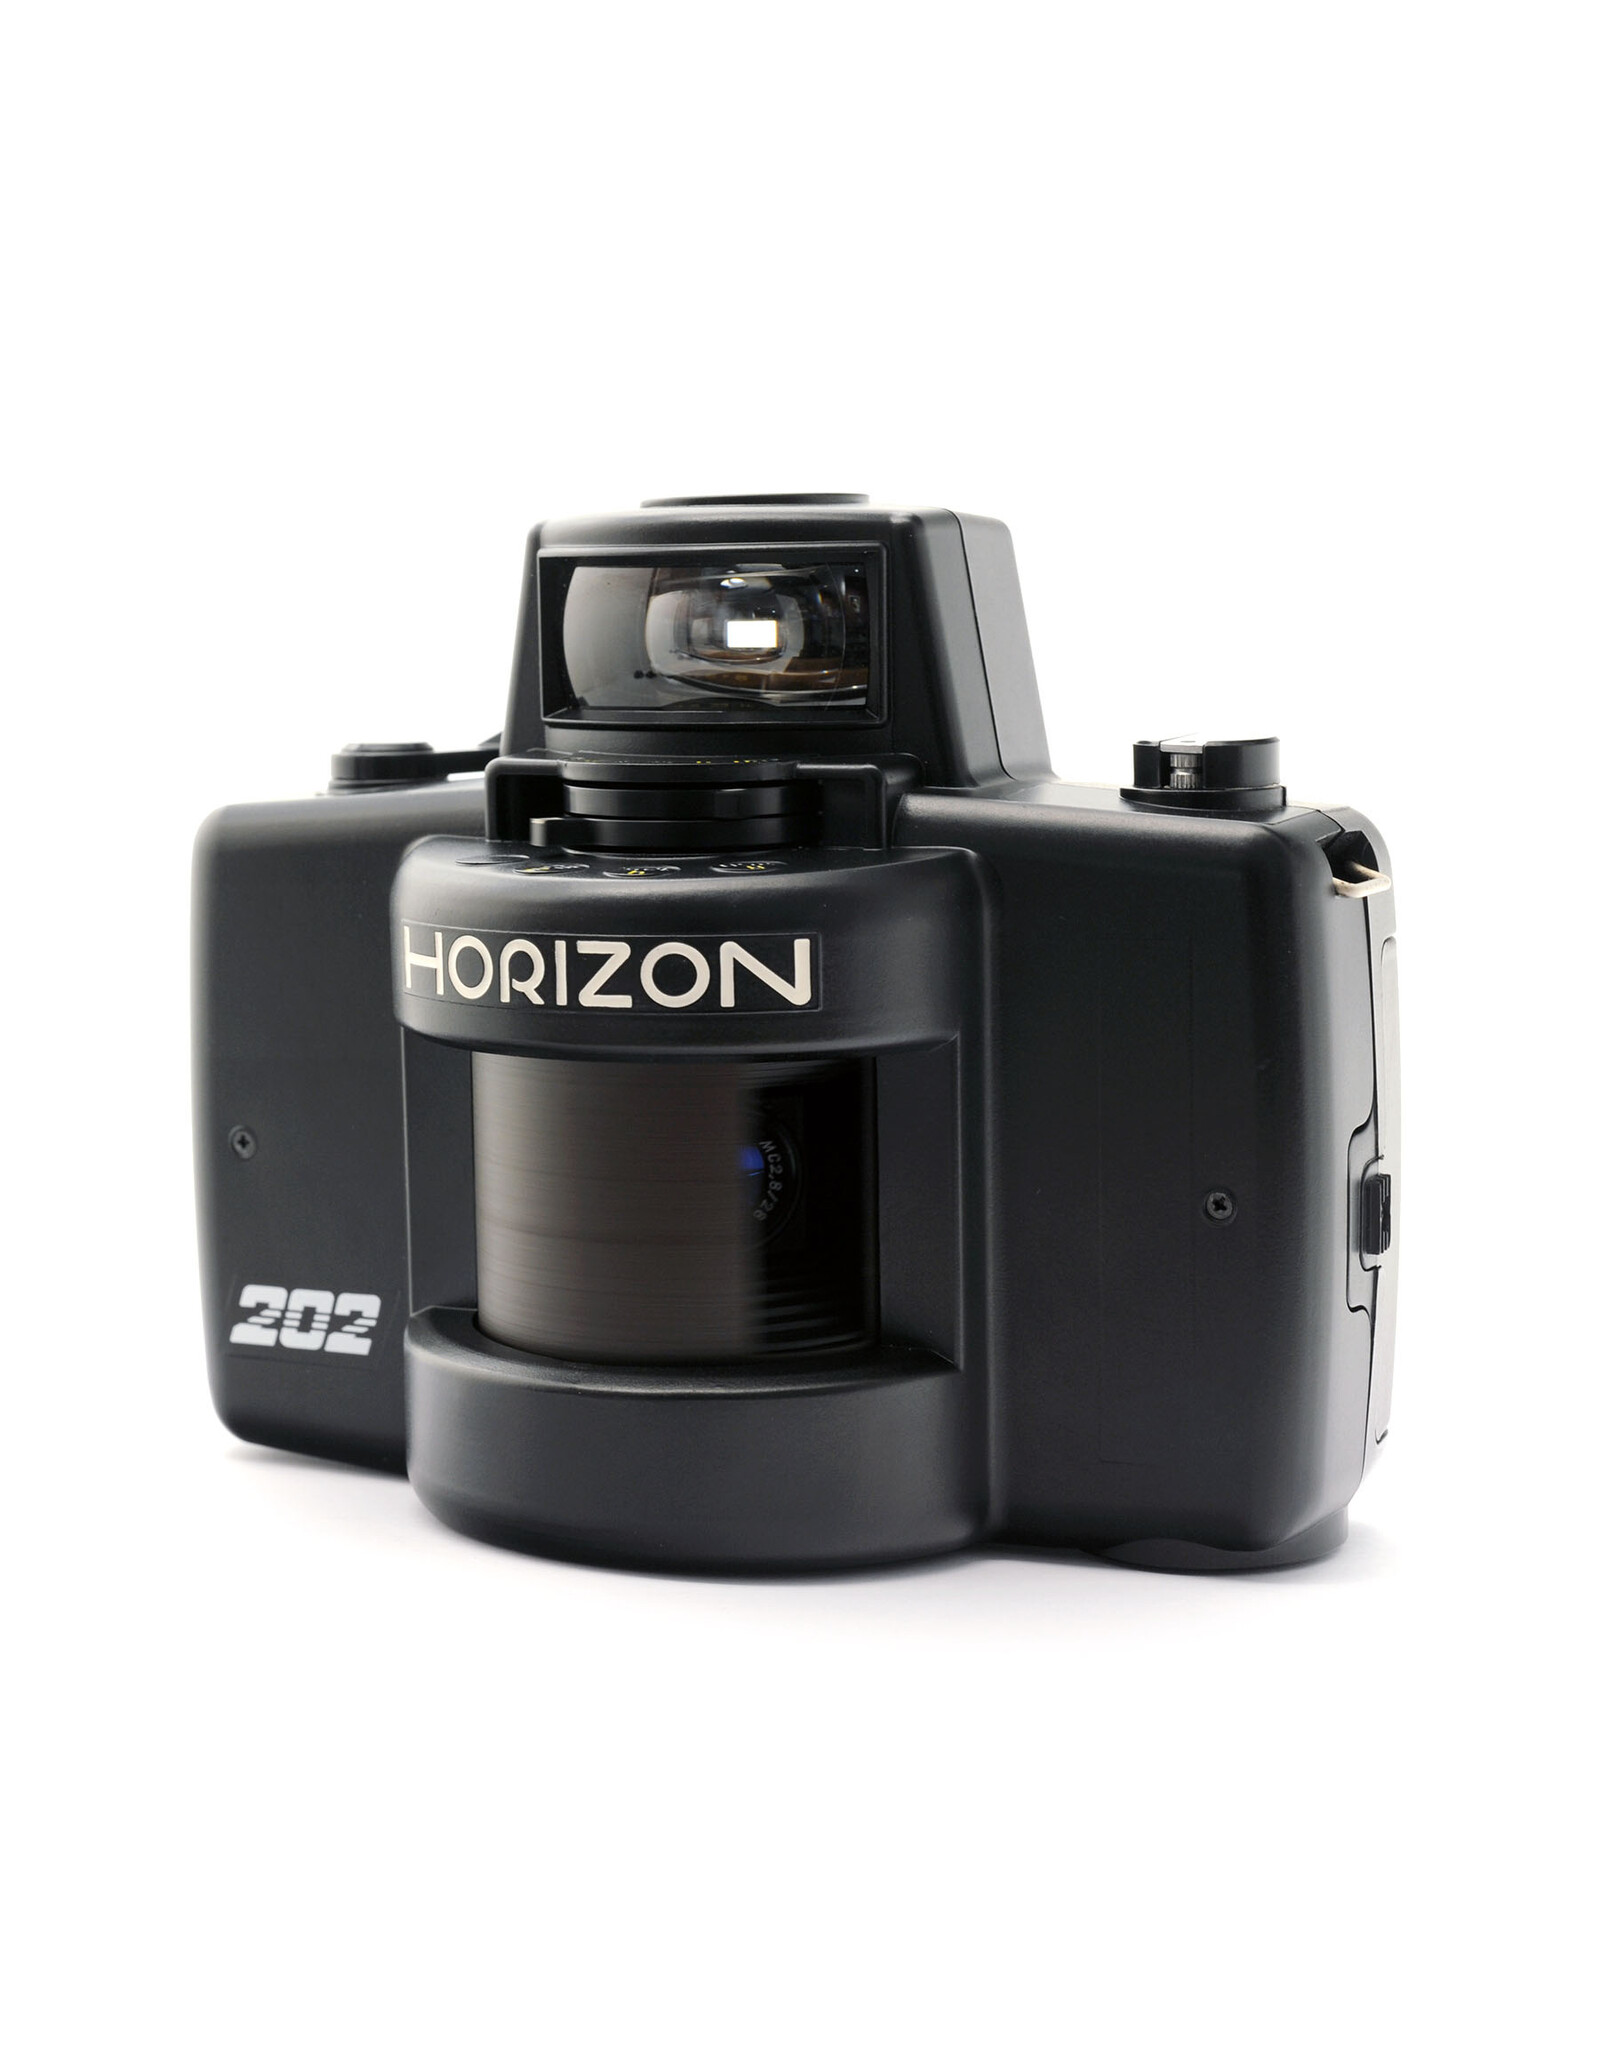 Horizon Horizon 202 Panoramic   A3062368